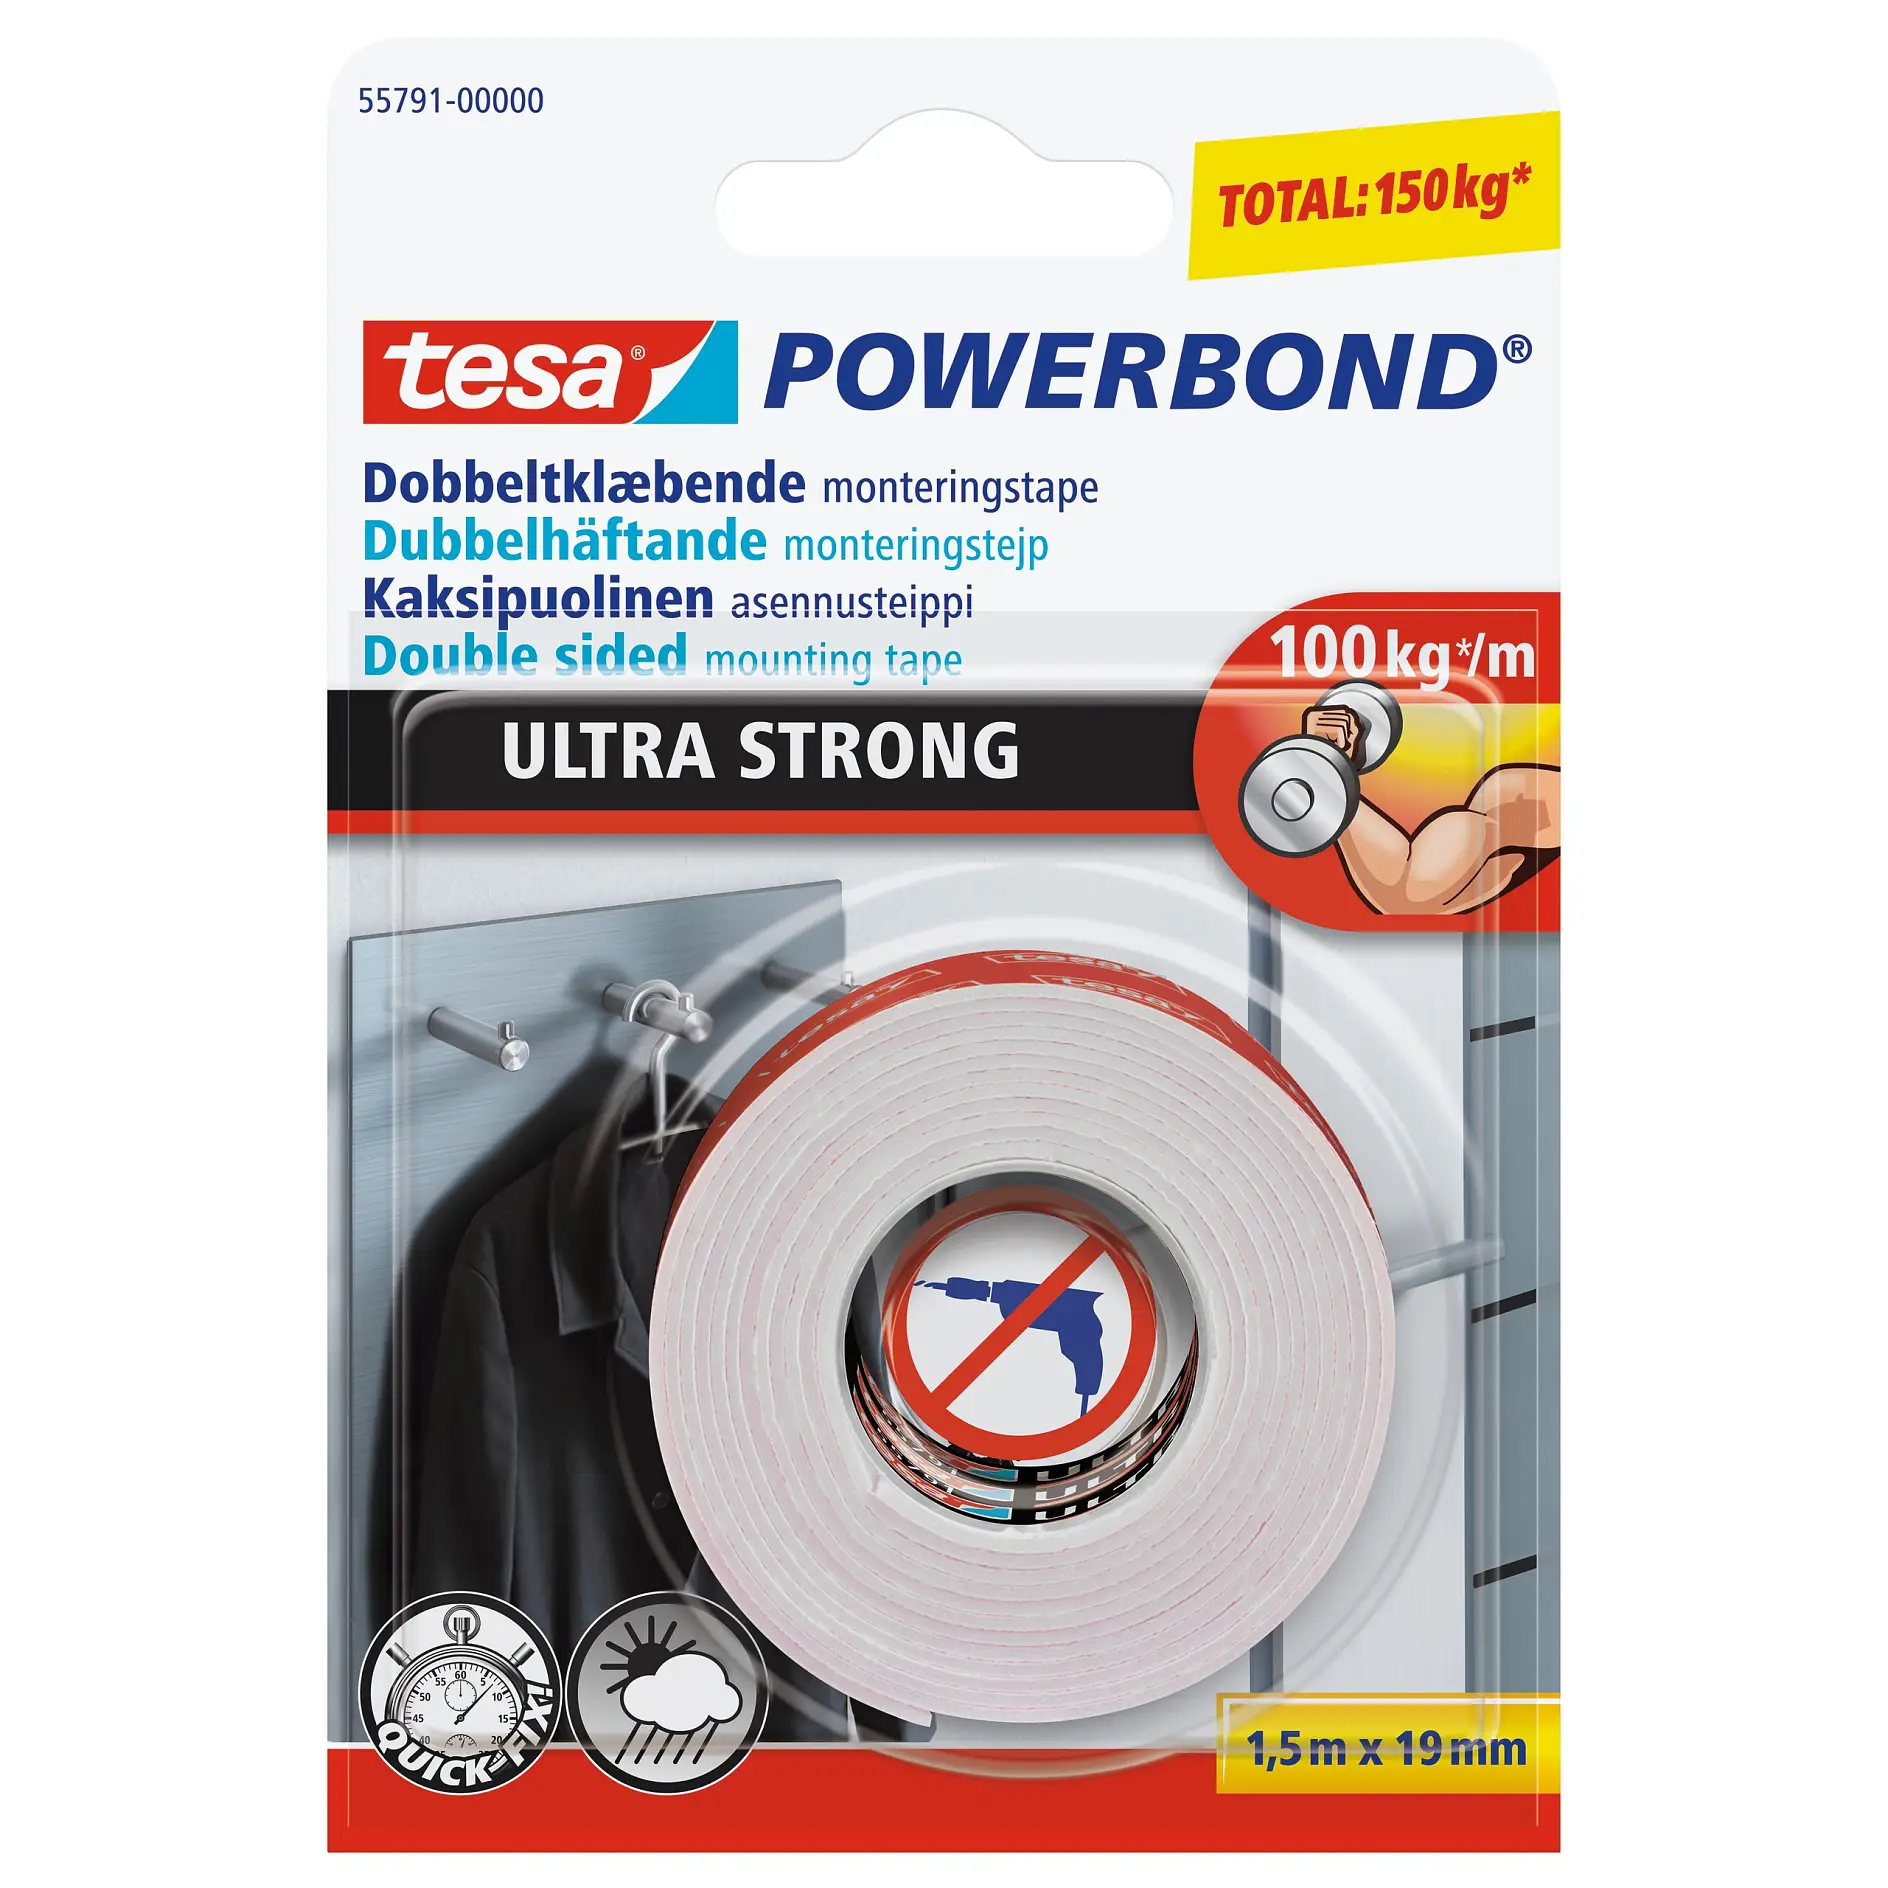 [en-en] 55791 - tesa Powerbond Ultra strong LI408